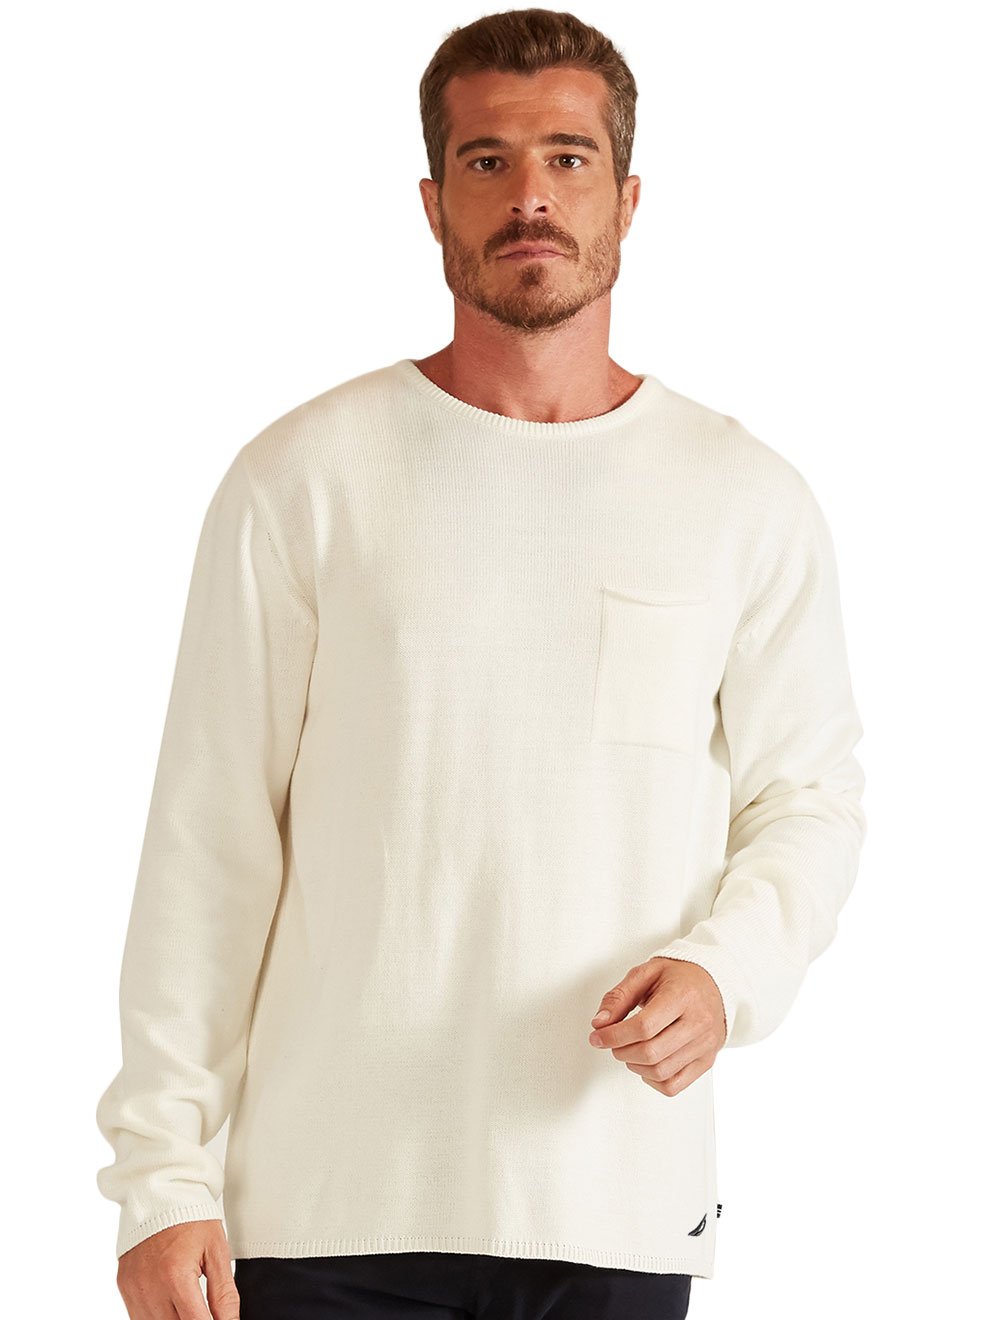 Blusa Nautica Masculina Tricot Sweater Cotton Pocket Off-White